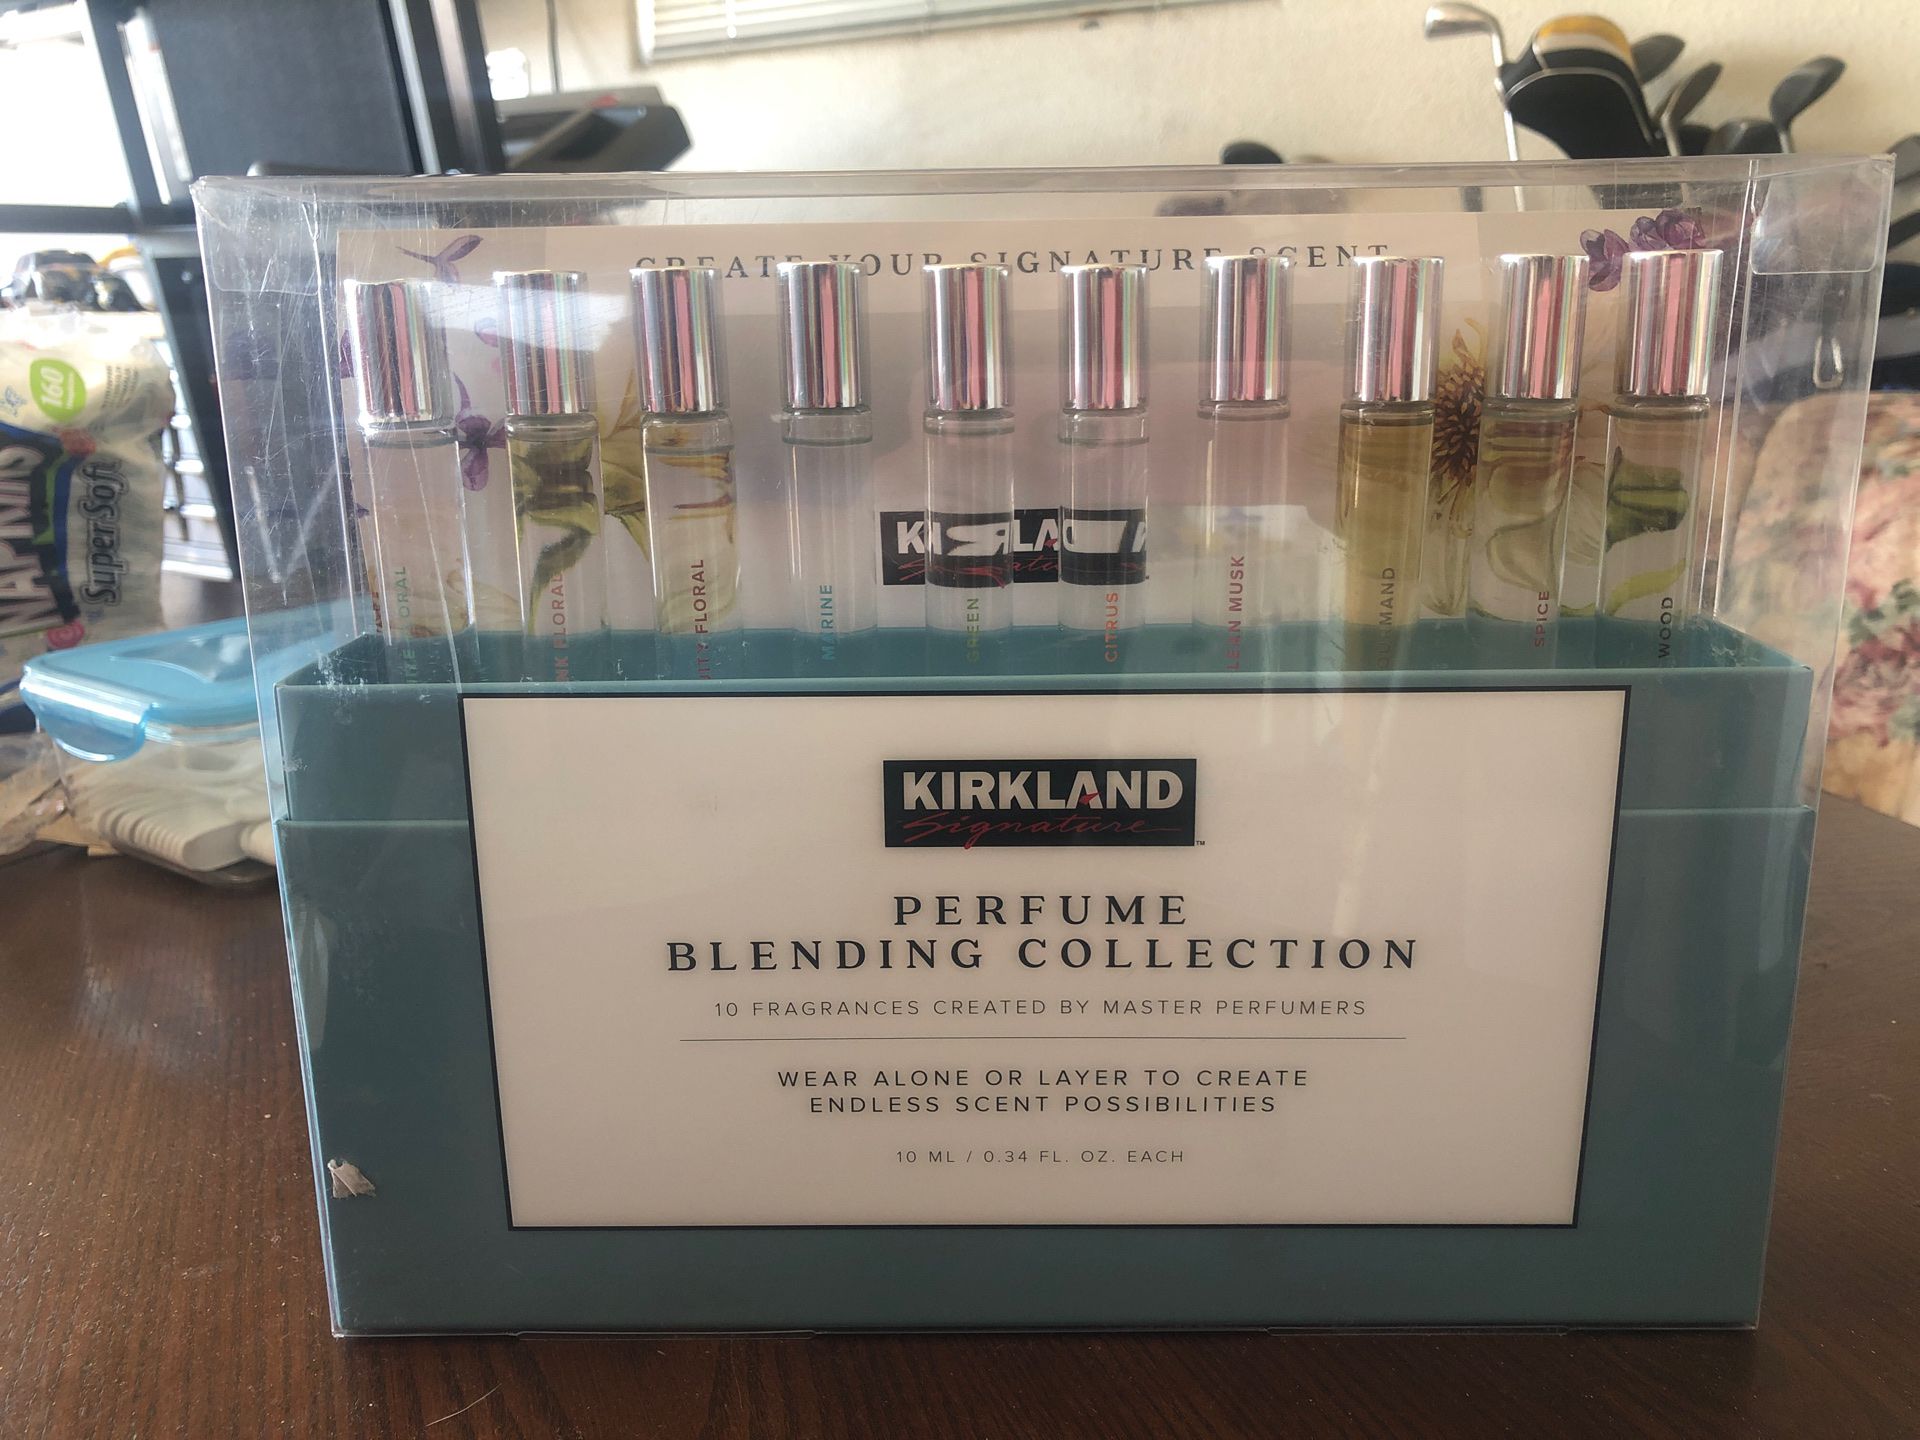 Kirkland perfume blending collection